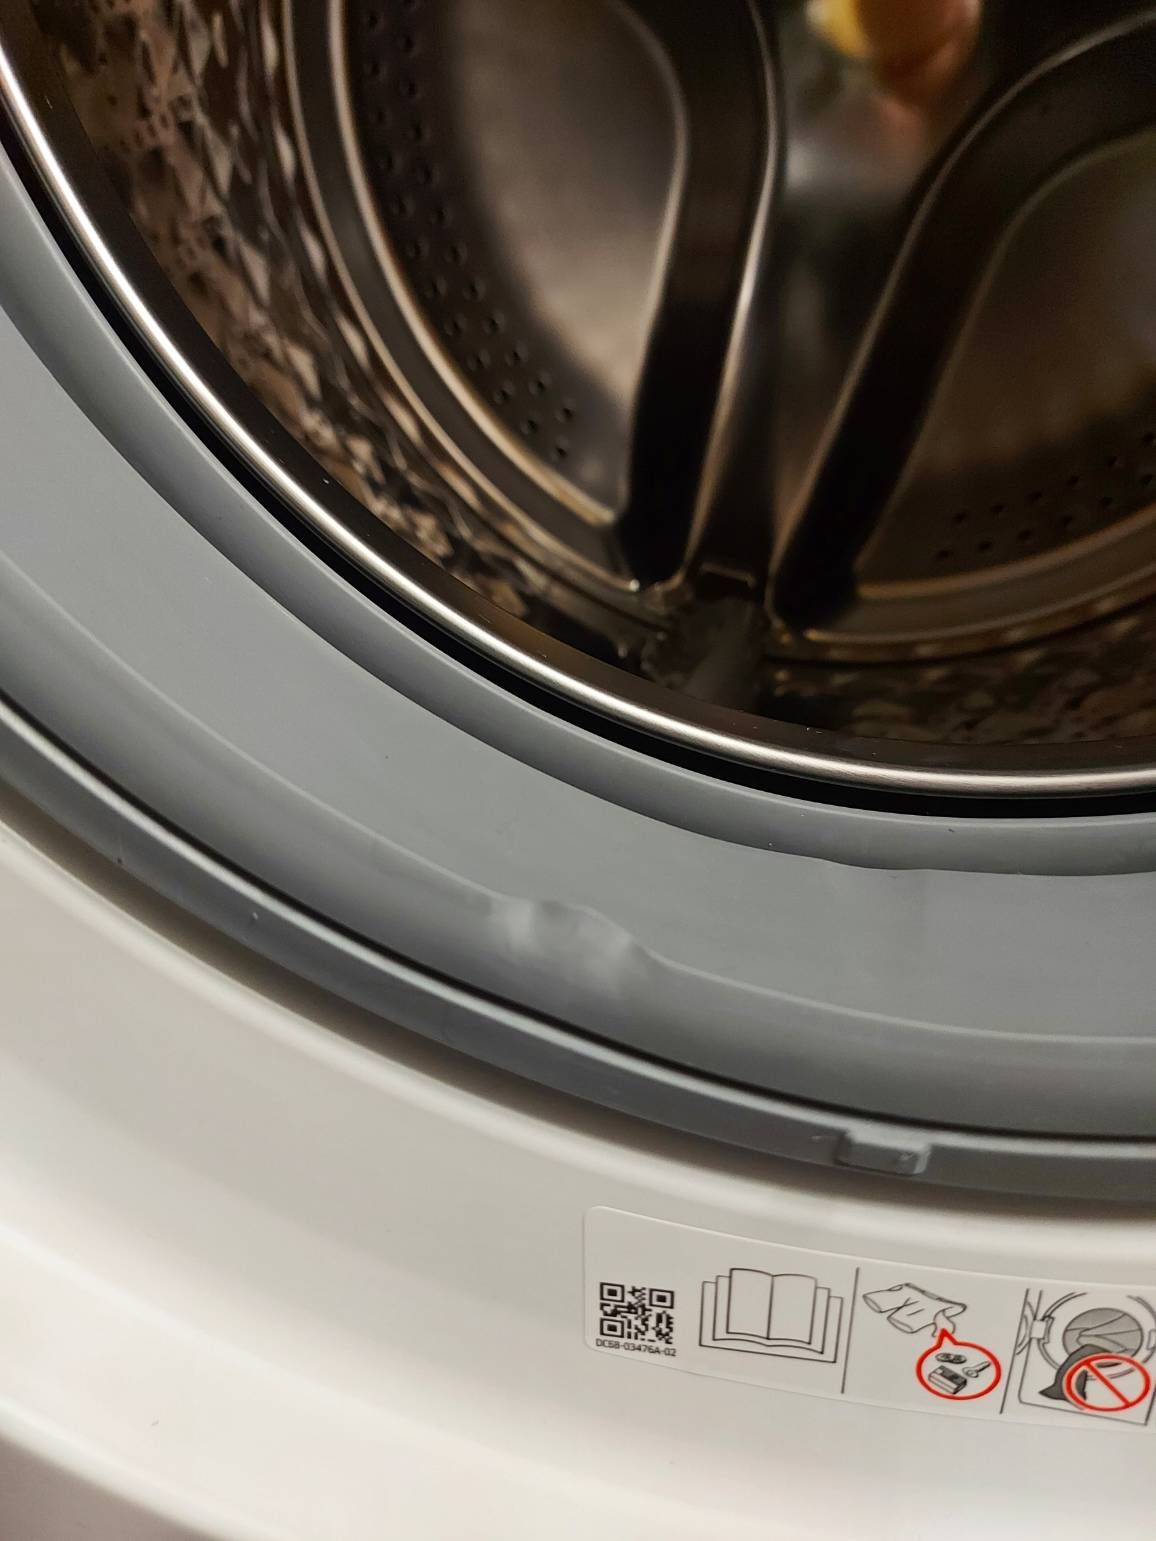 Guarnizione lavatrice - Samsung Community